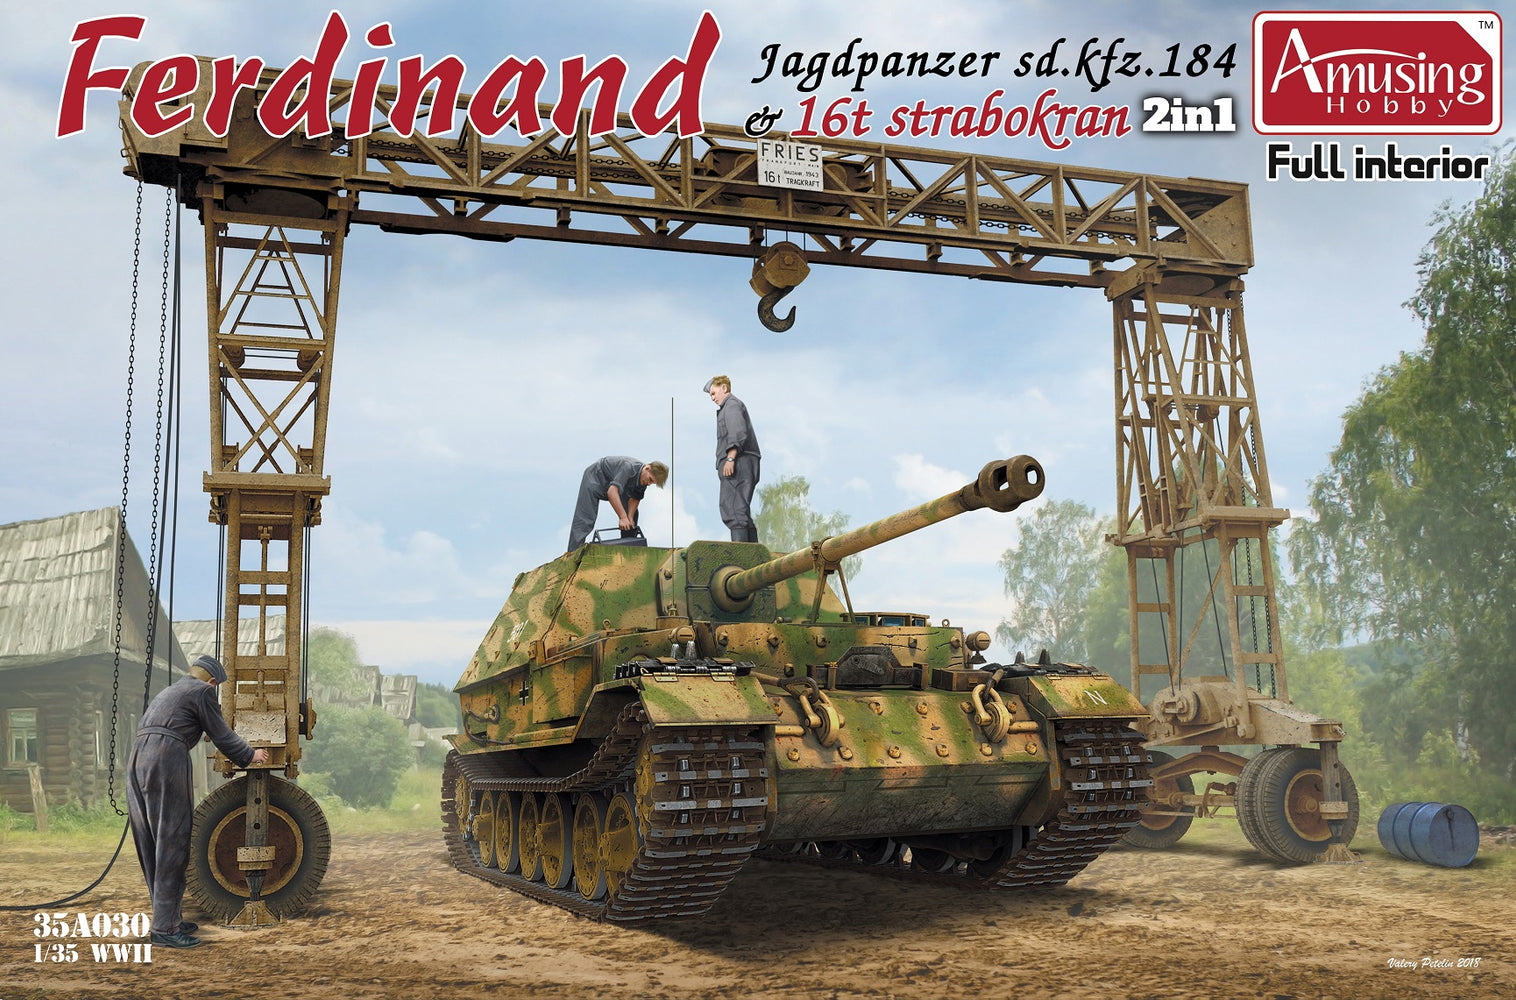 Amusing Hobby 35A030 1/35 Sd.Kfz.184 Ferdinand & strabokran 2 in1 Kit